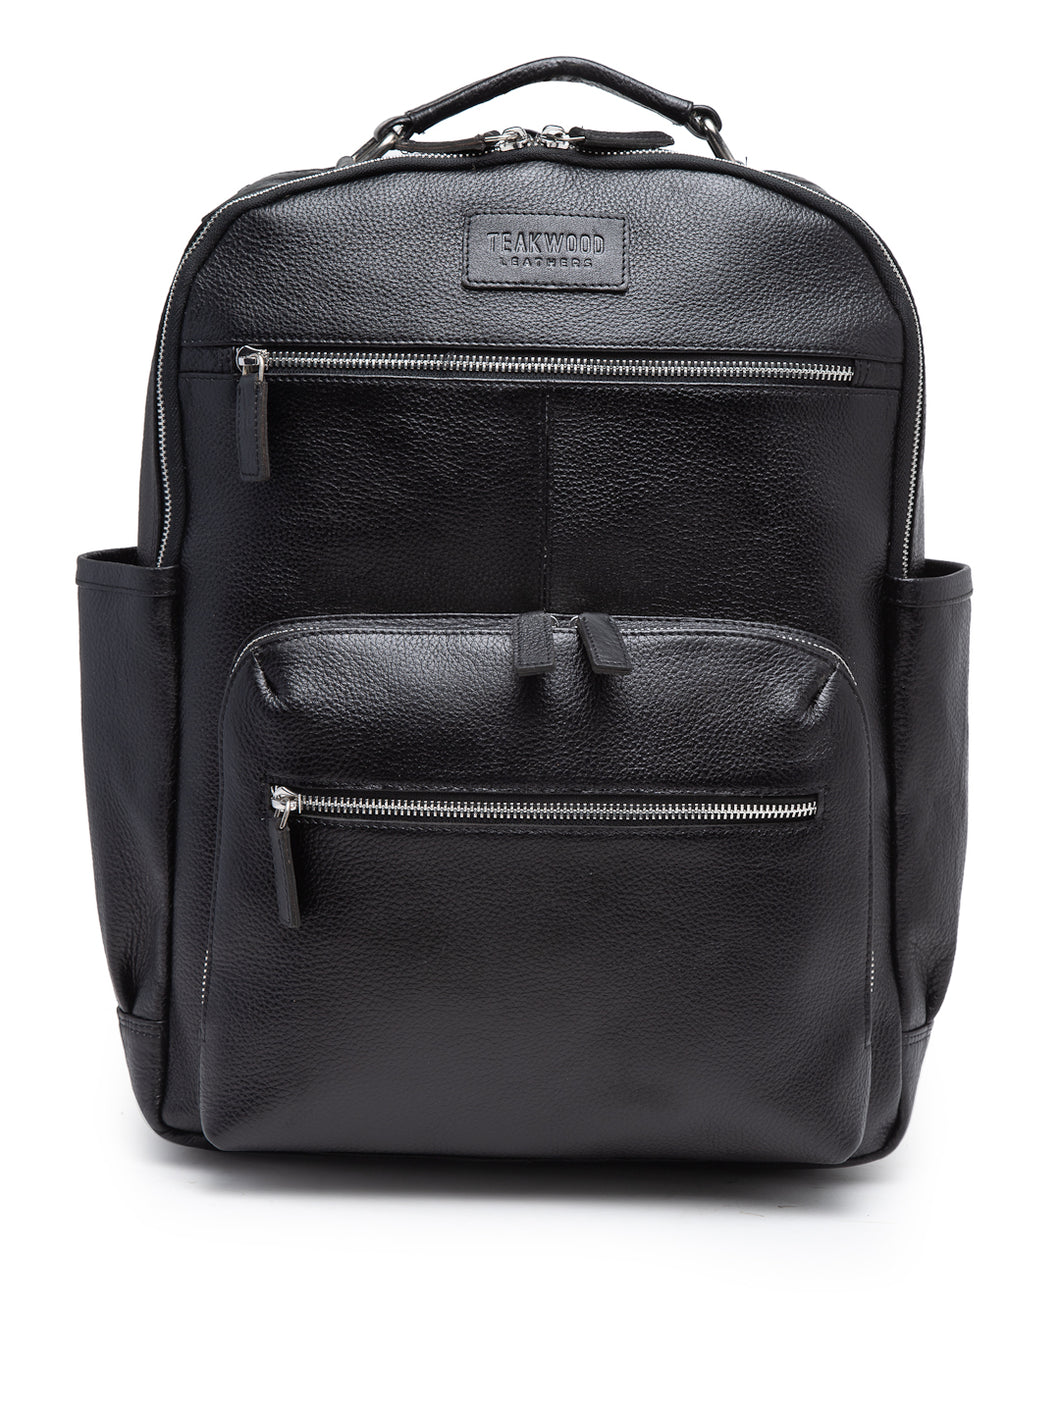 Teakwood Unisex Genuine Leather Black textured Backpack||Unisex Laptop Bag/Backpack